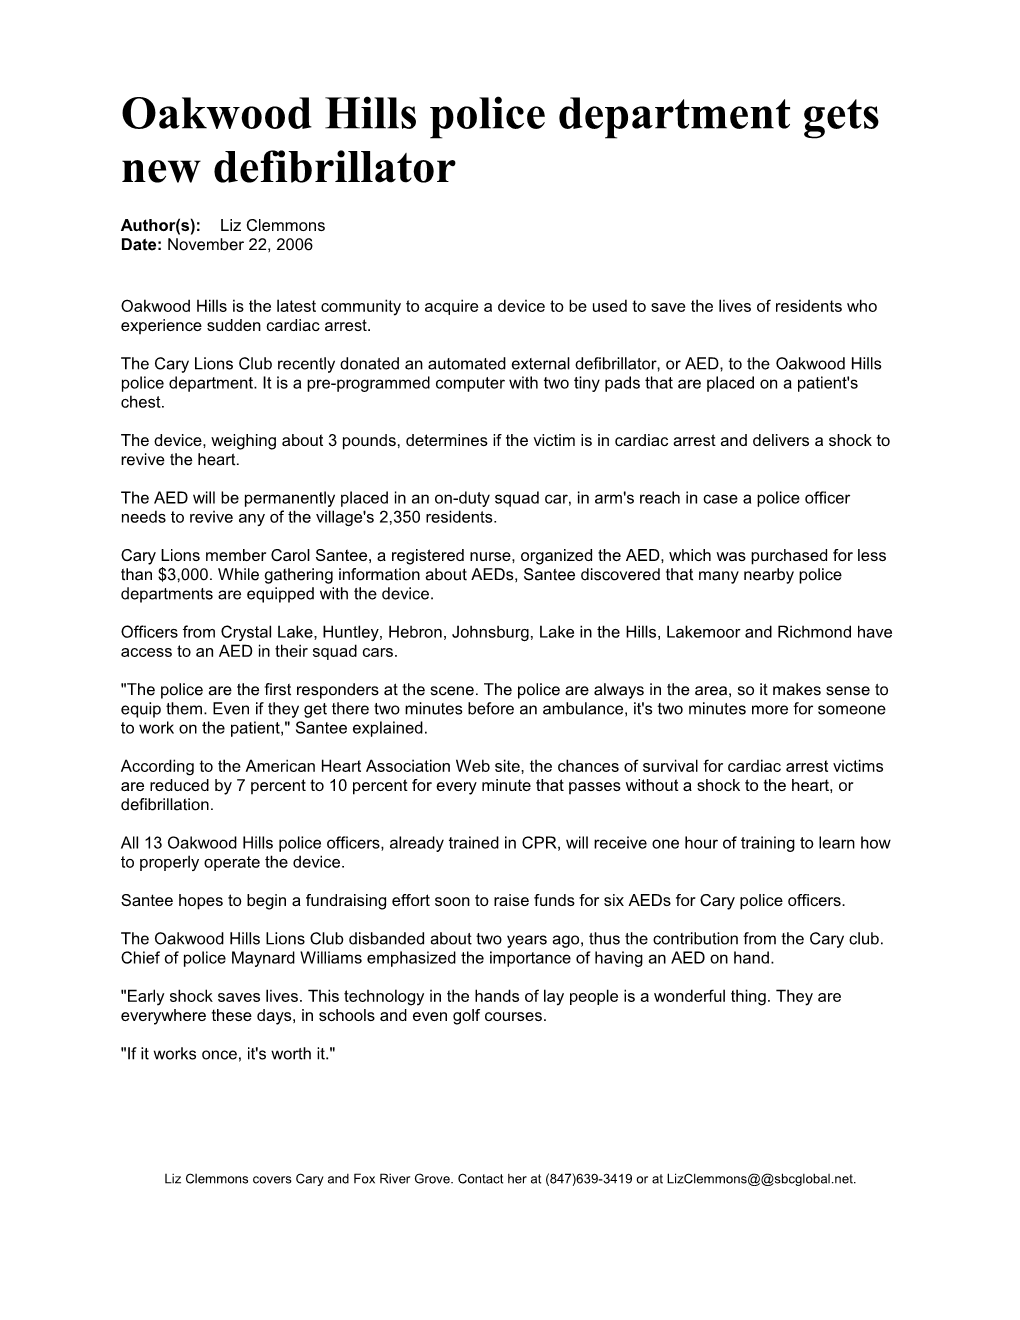 Oakwood Hills Police Department Gets New Defibrillator